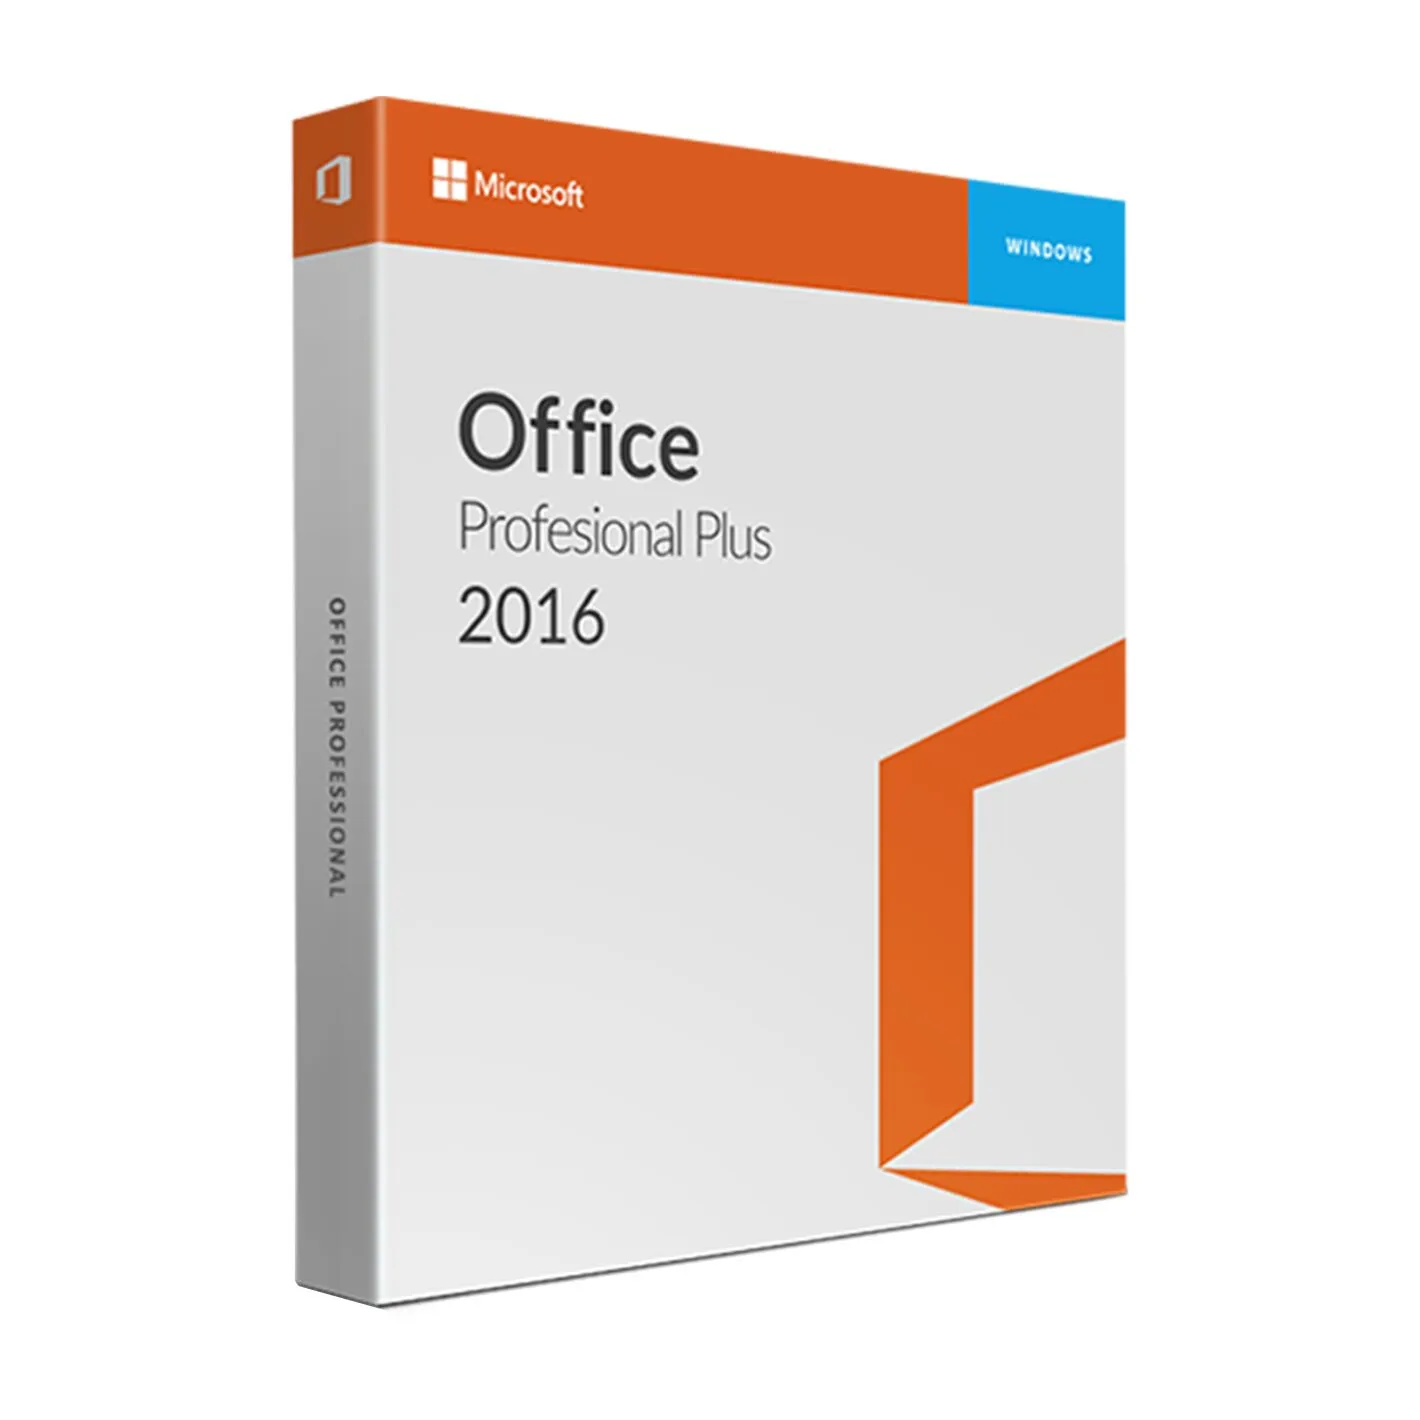 hidrógeno dilema Cincuenta Microsoft Office 2016 Professional Plus - Compu593